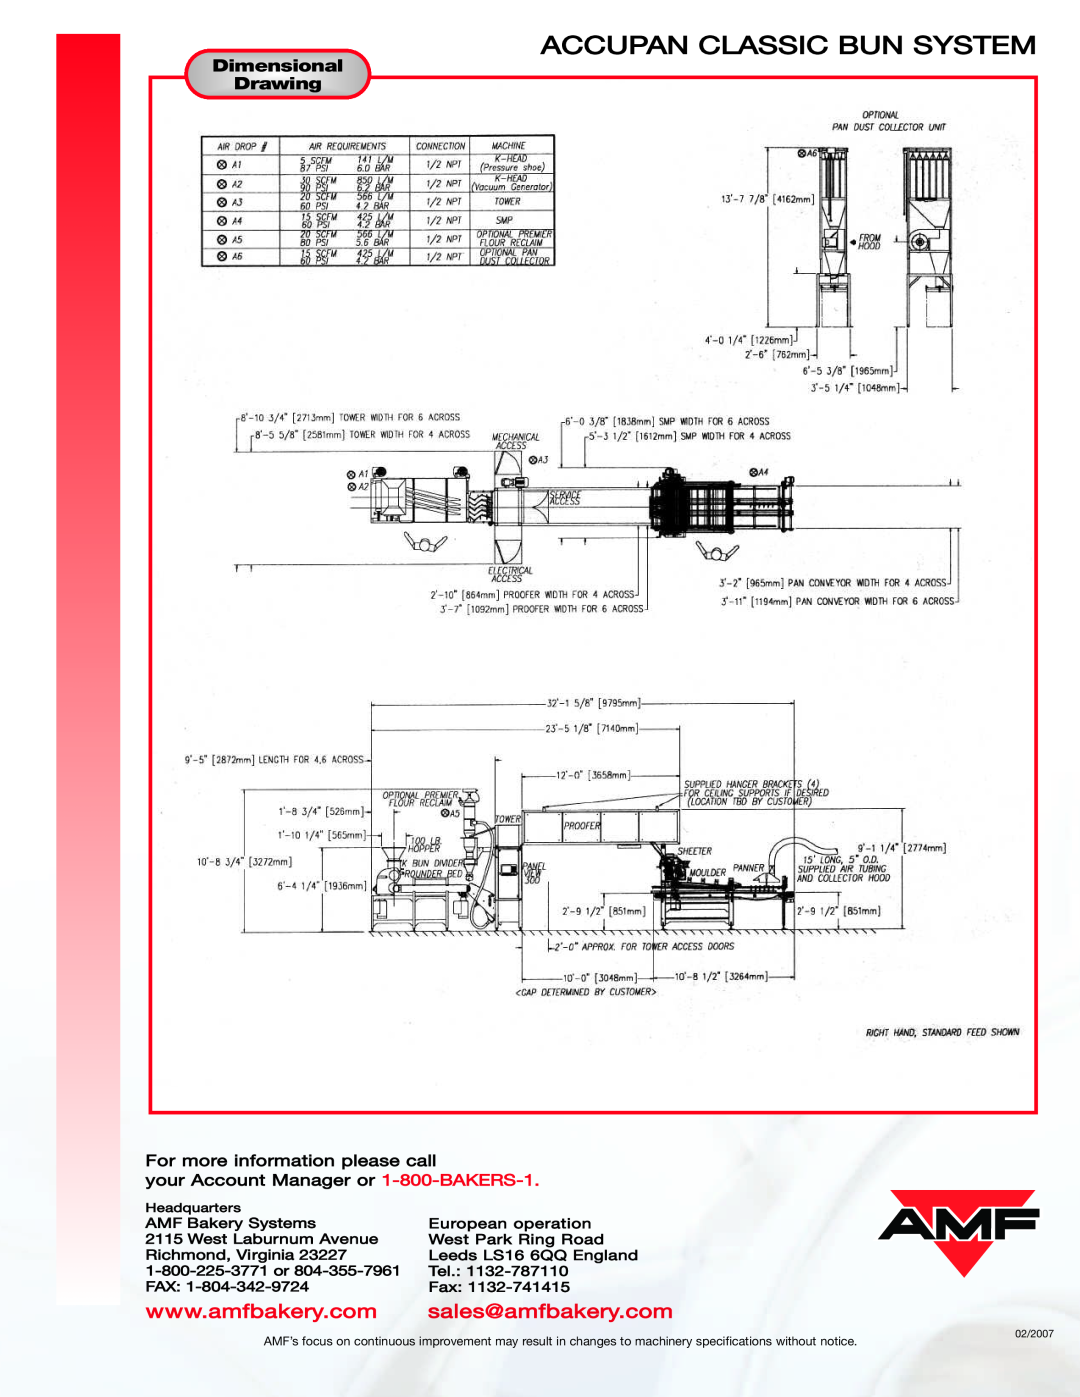 AMF Accupan Classic Bun System manual Dimensional, Drawing 